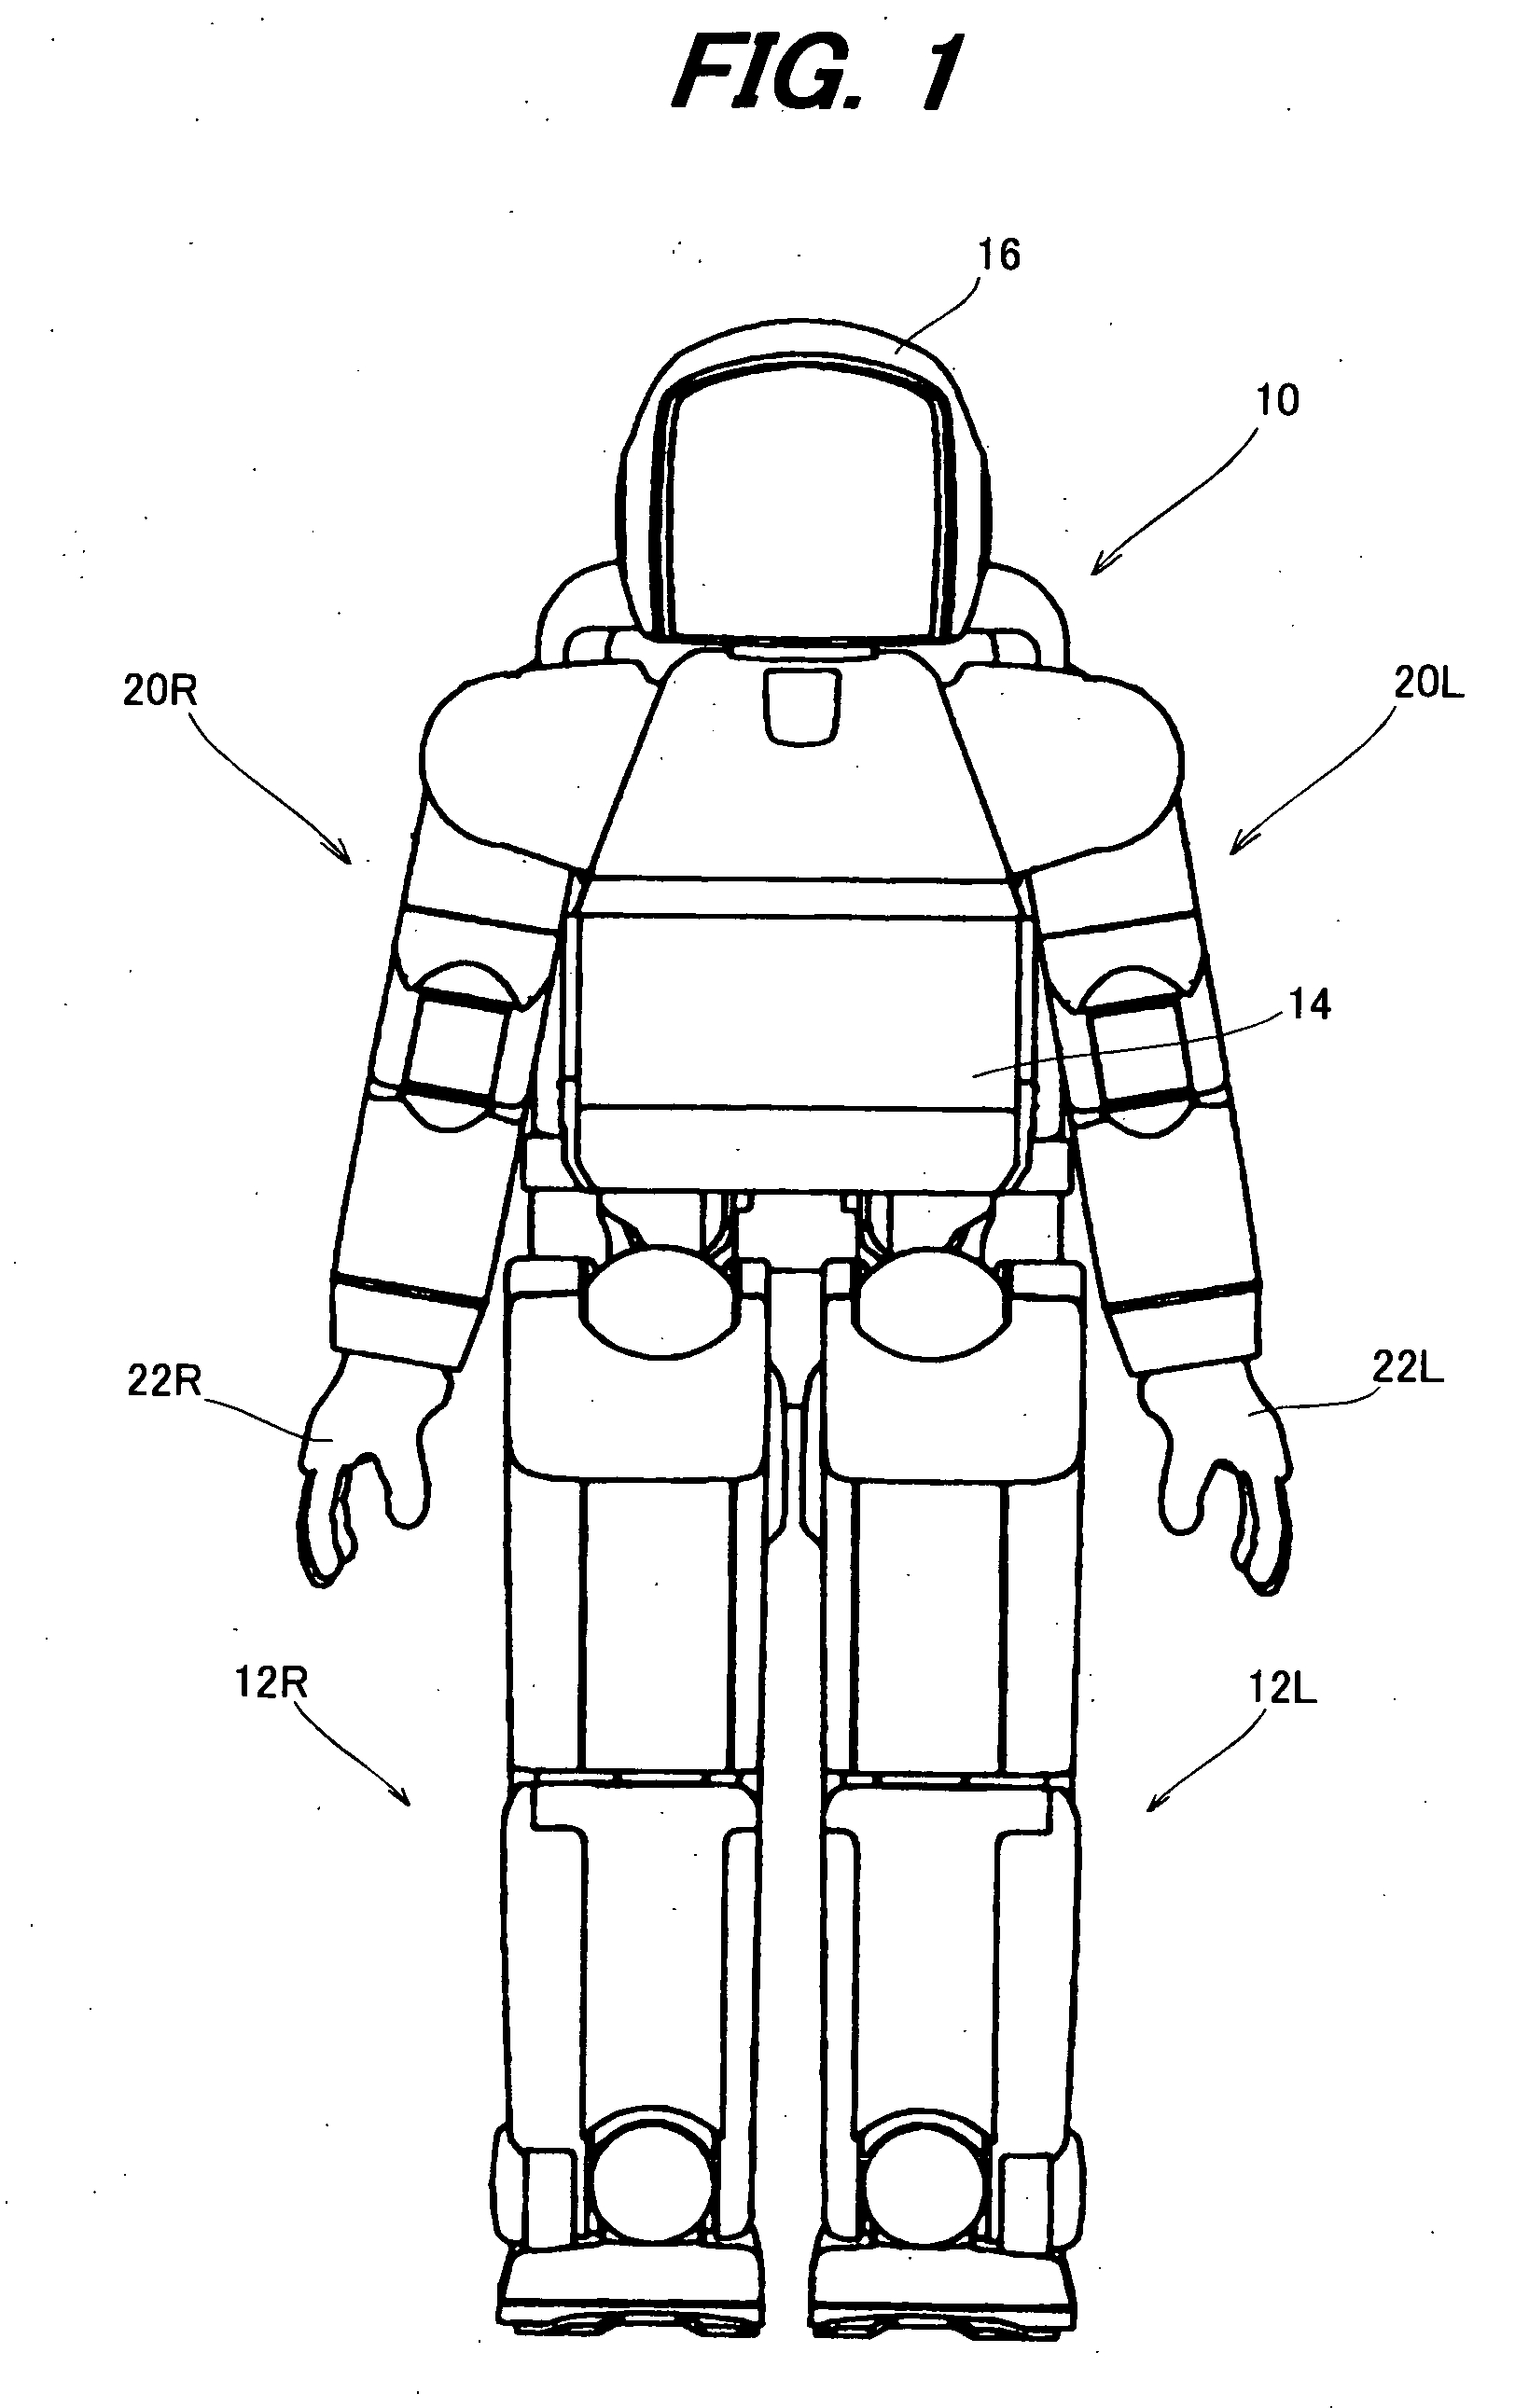 Legged mobile robot control system